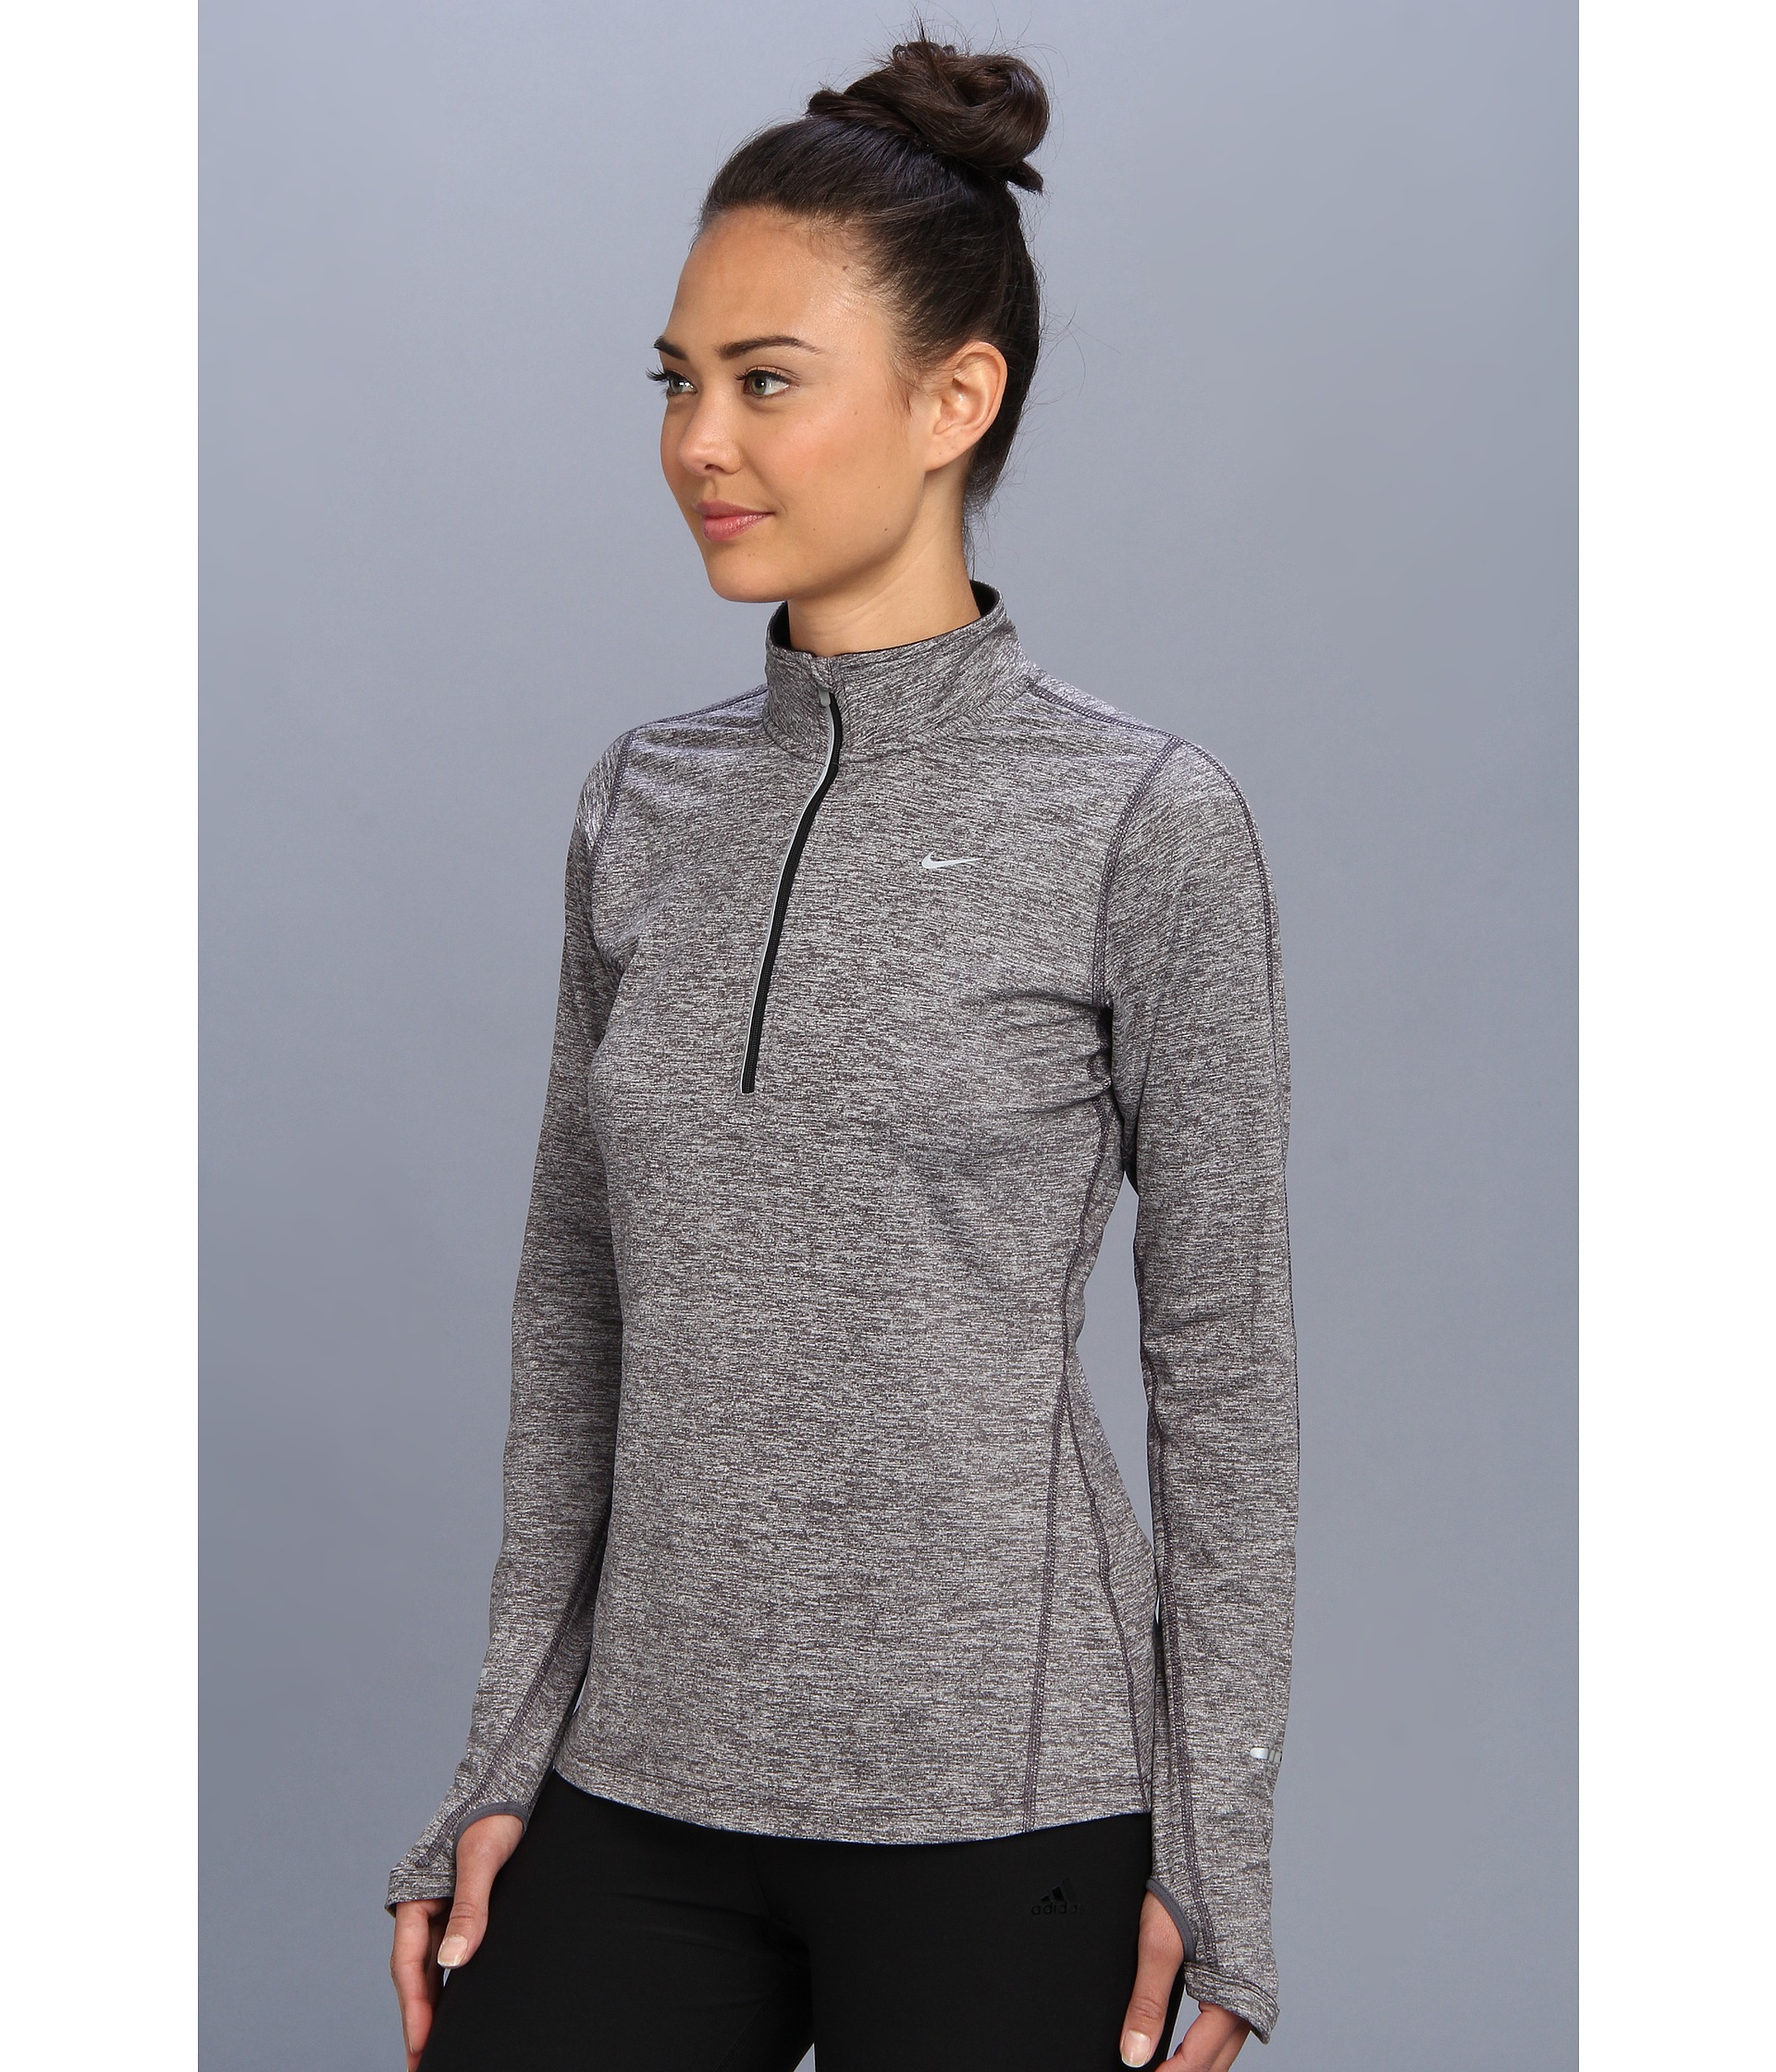 Nike Element Half-Zip in Gray (Dark Grey/Heather/Black/Reflecti) | Lyst